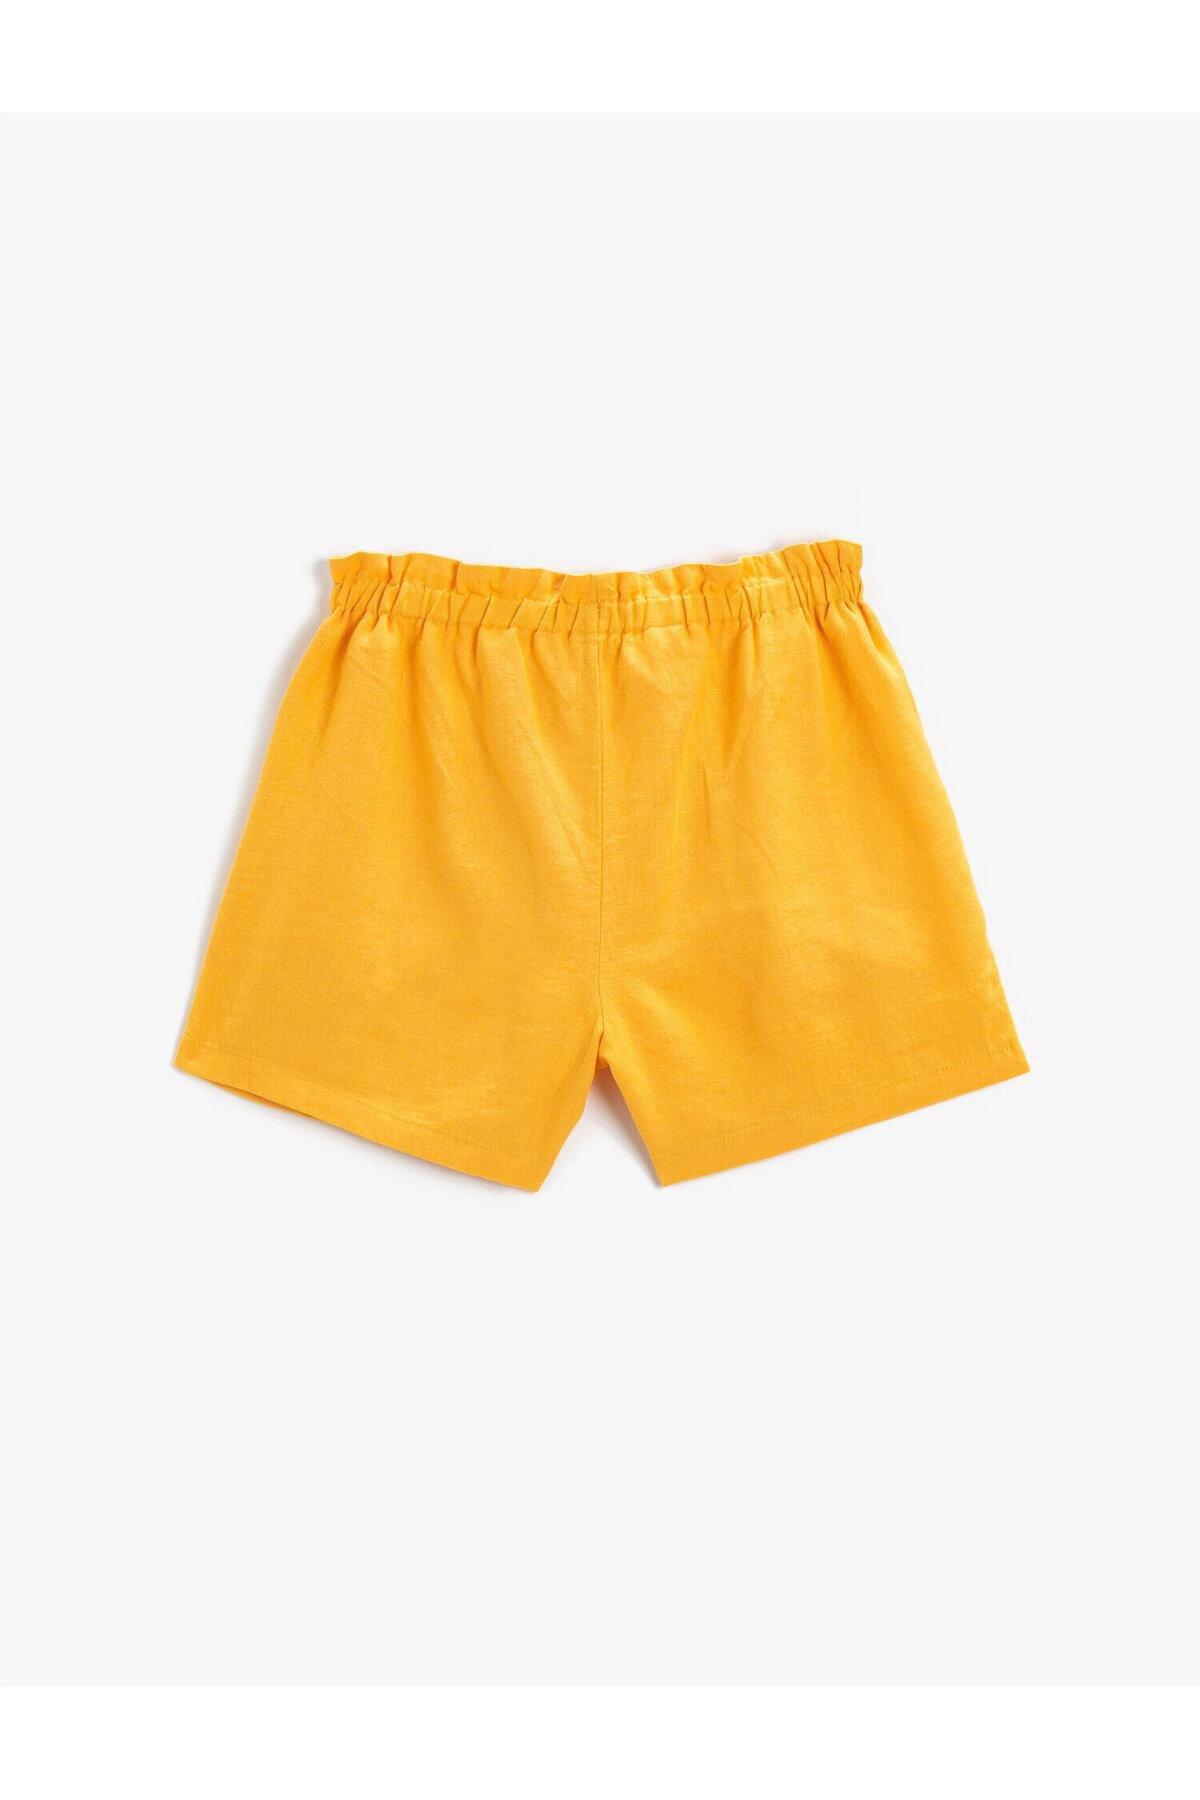 Koton - Orange Blended Shorts, Kids Boys